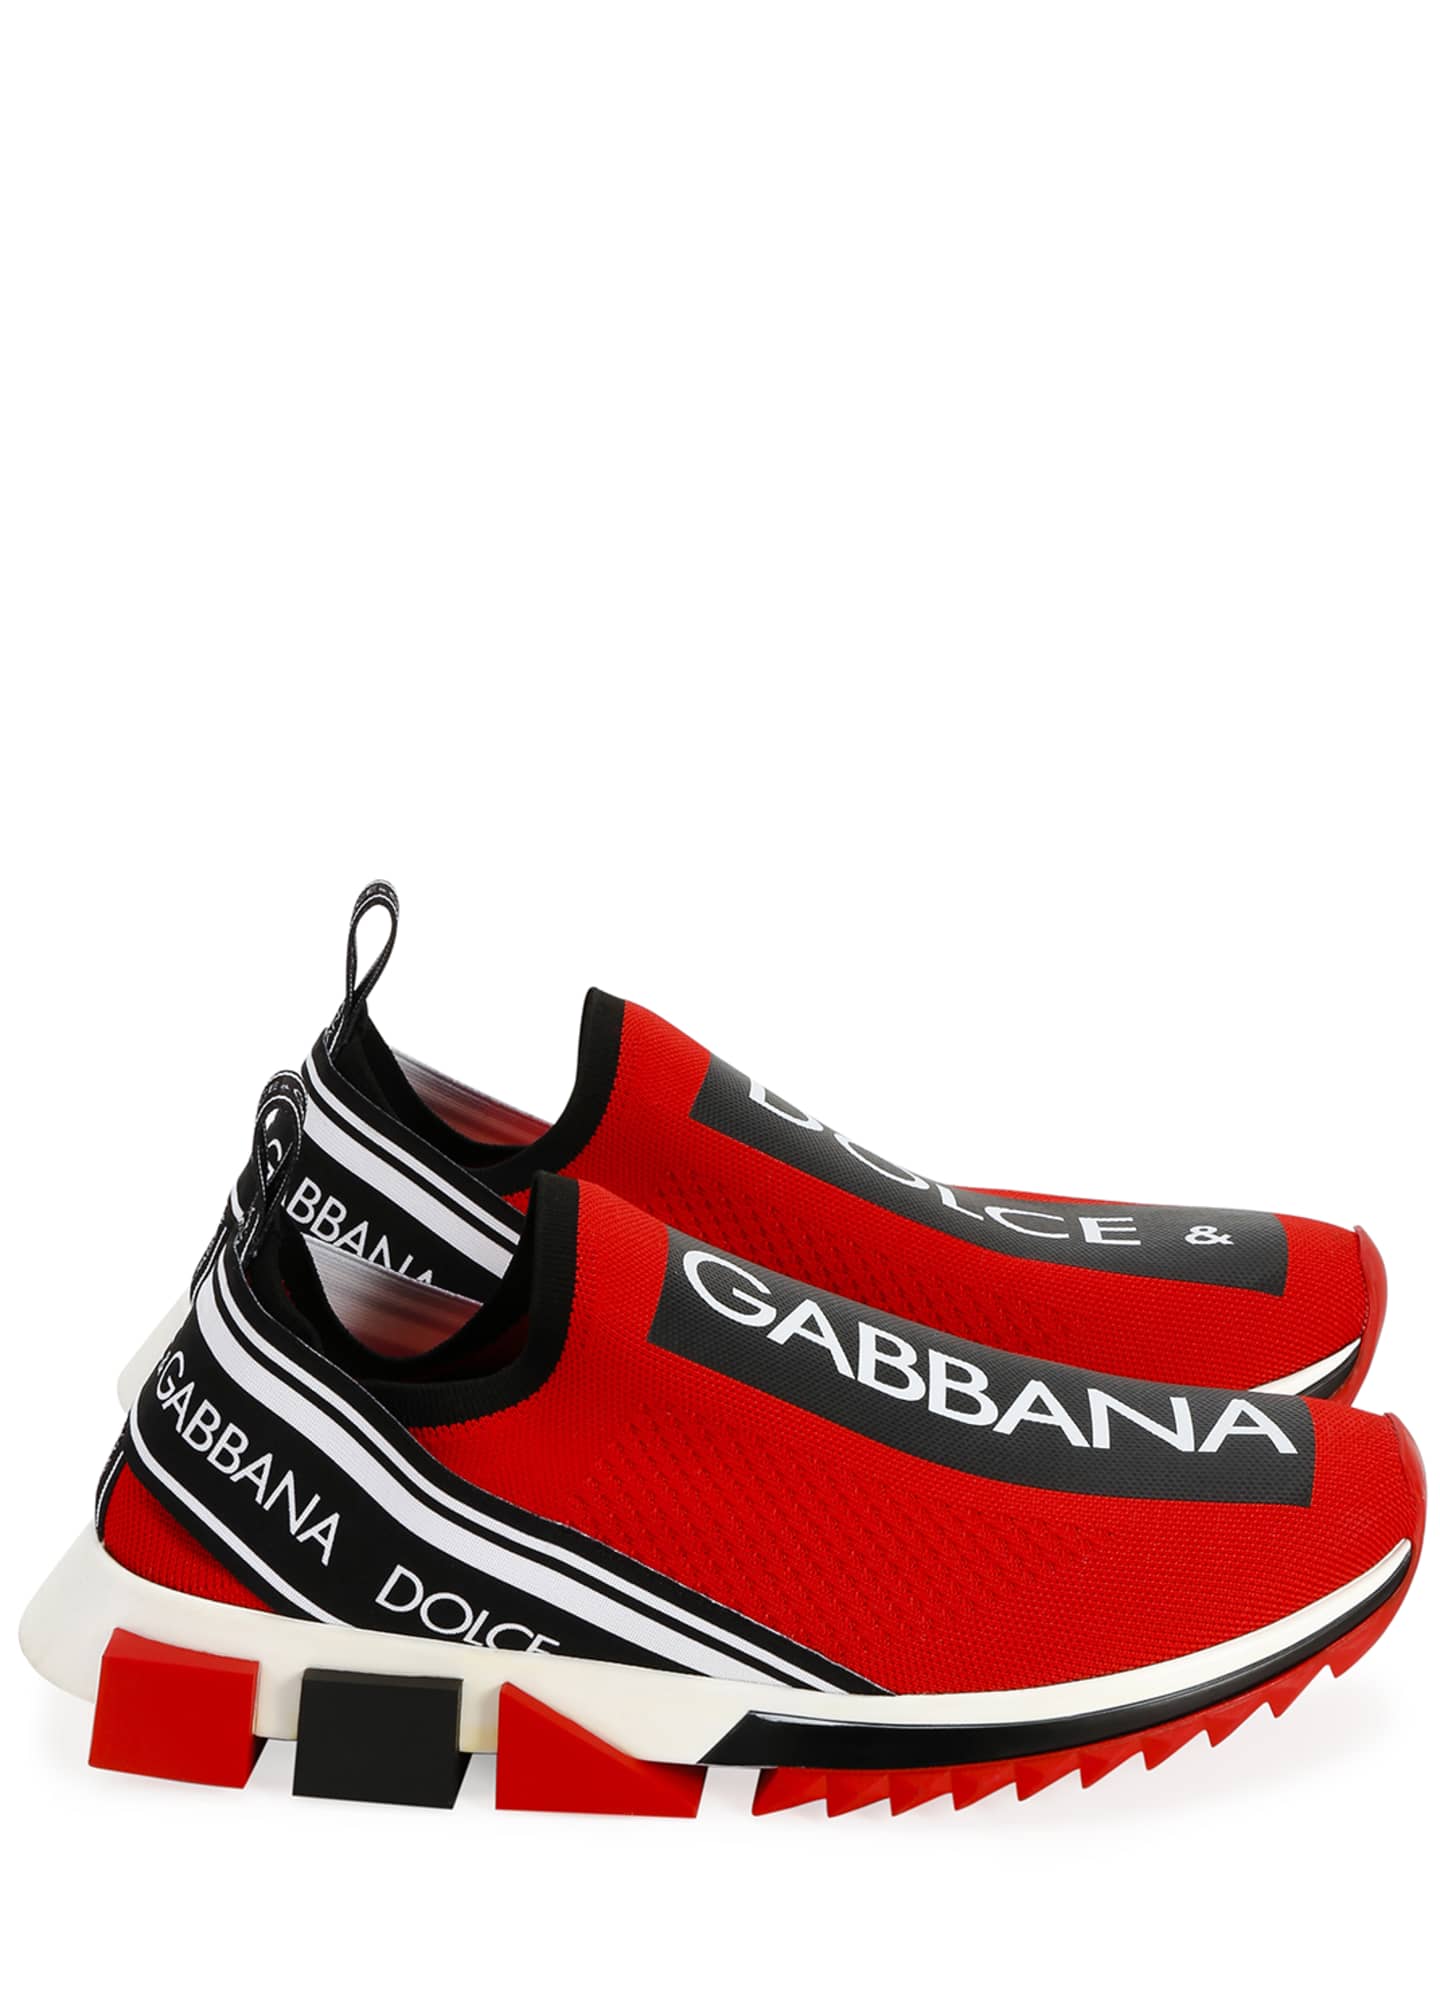 dolce gabbana bling shoes